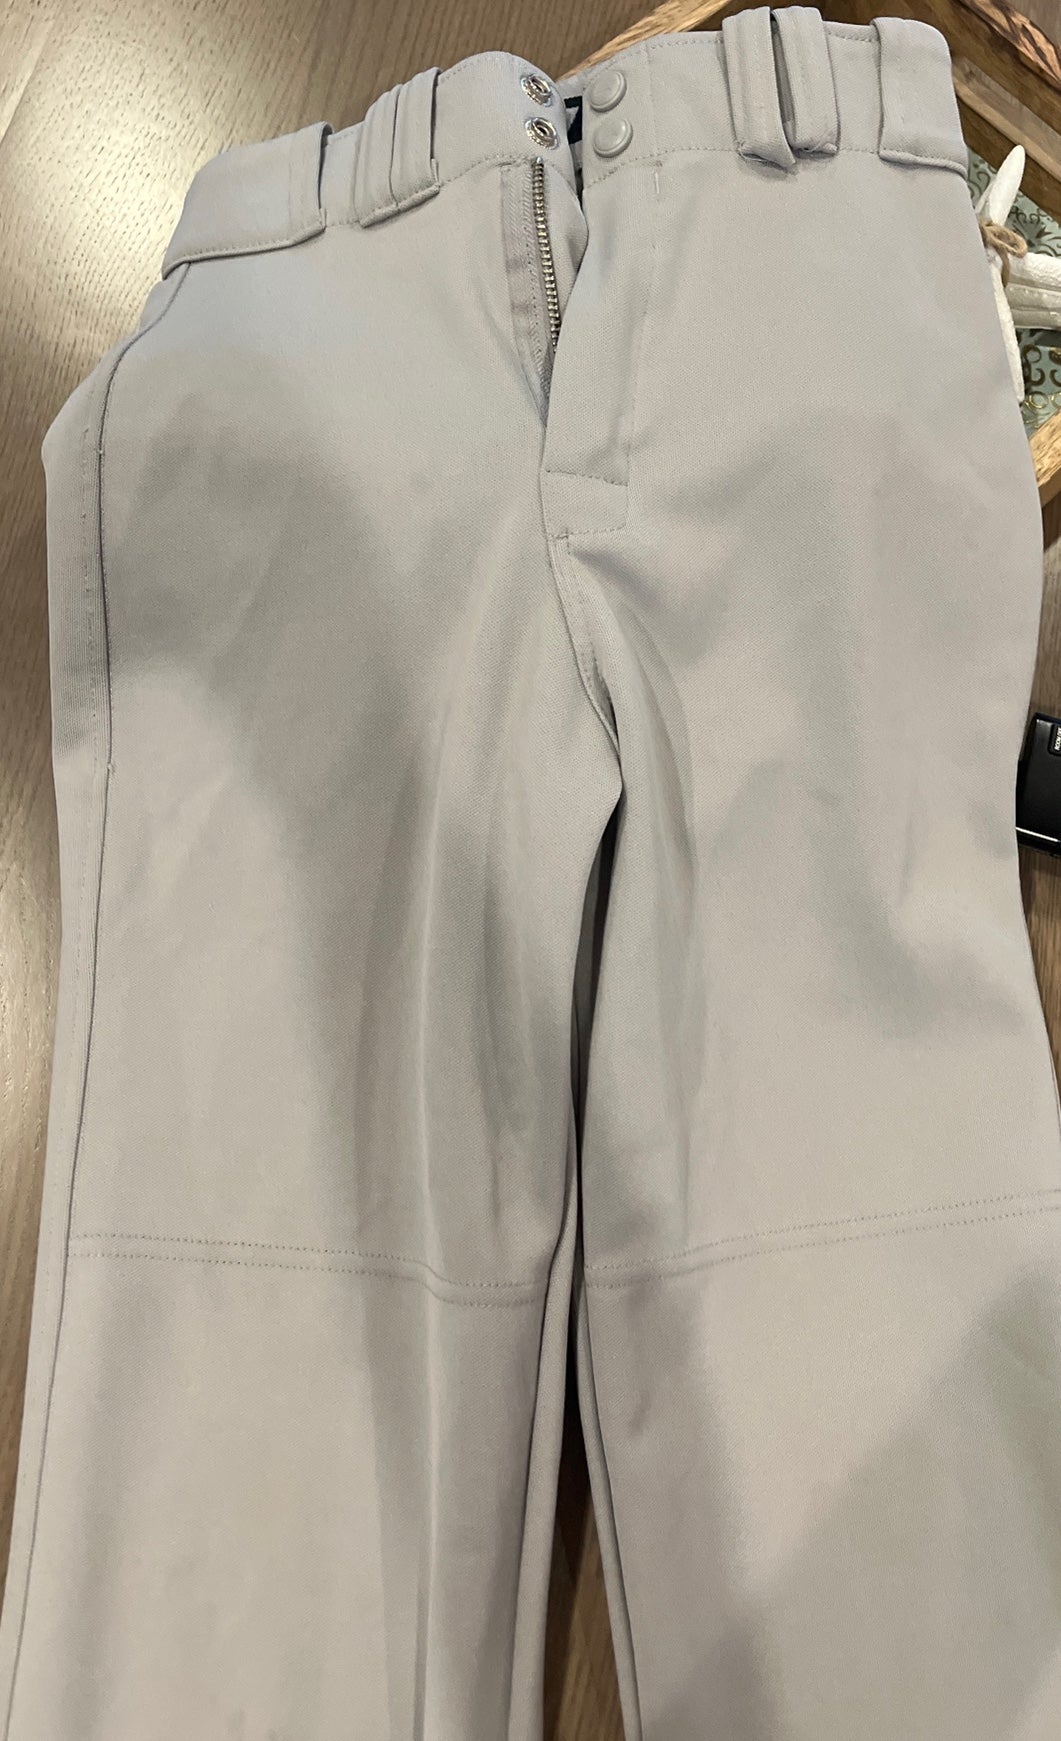 New Easton Pro Pinstripe Youth Baseball Pants White/Navy (Yankees)